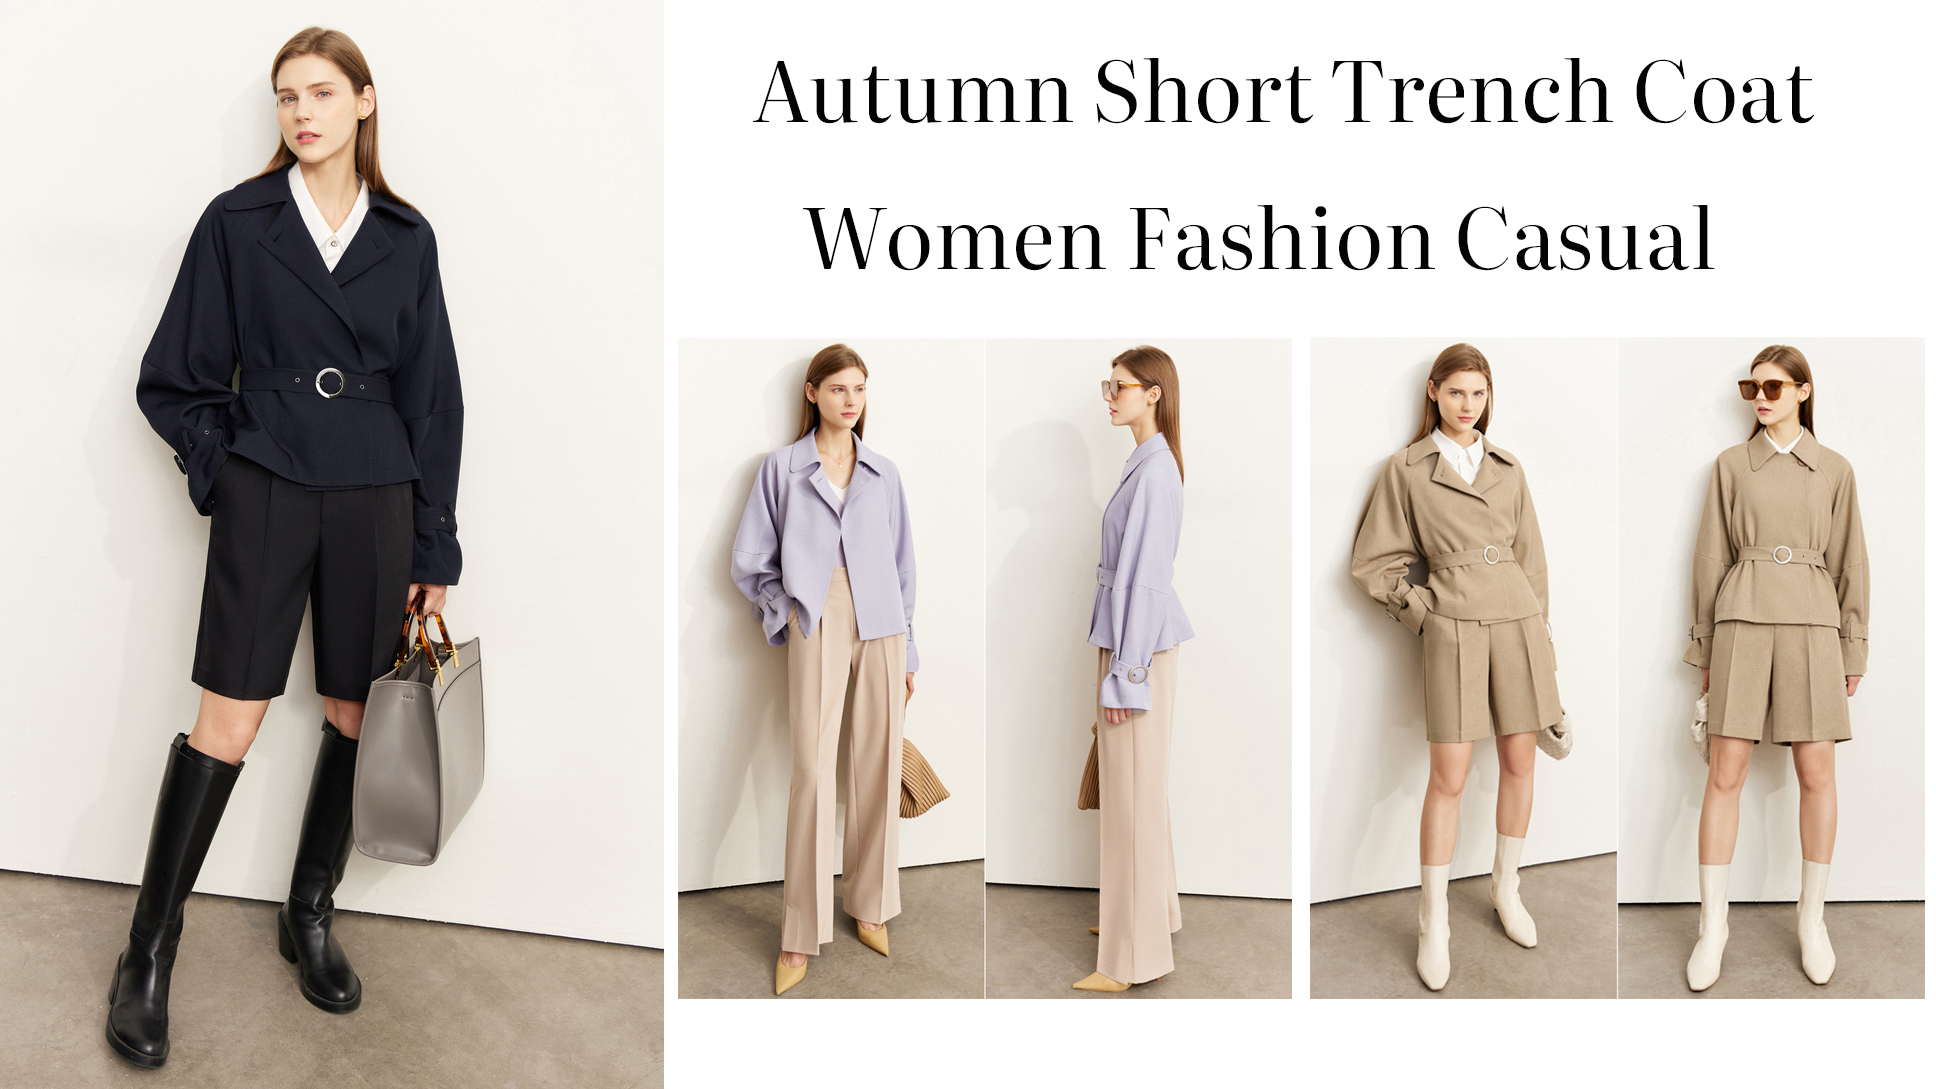 Quality Autumn Short Trench Coat Women Fashion Casual Manufacturer |Auschalink